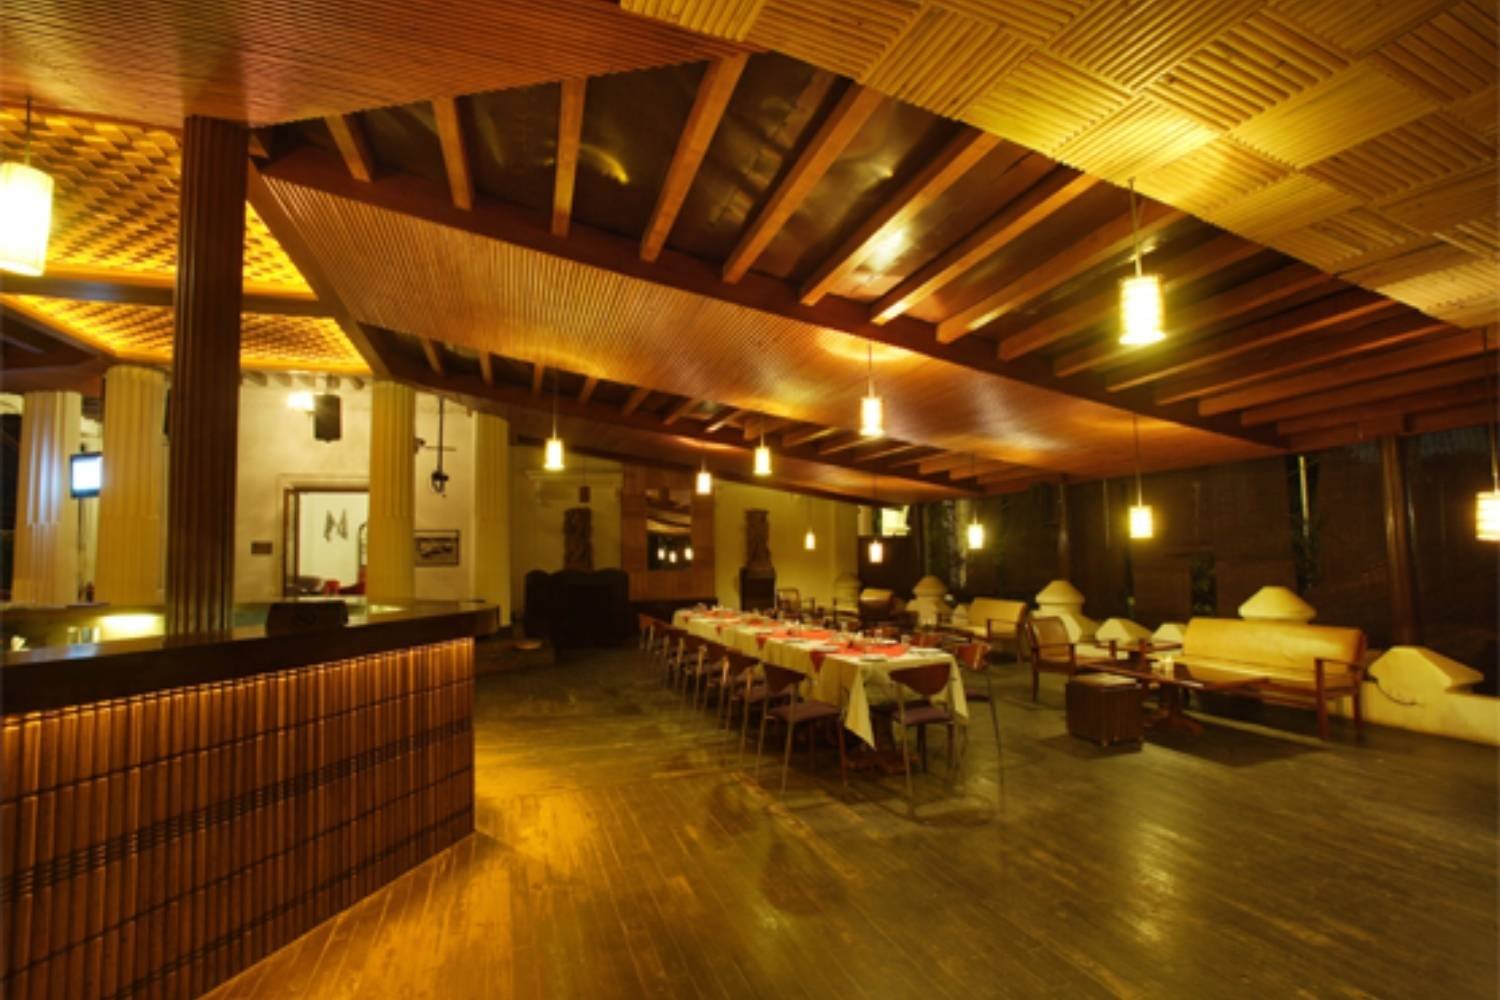 Dining area in Jayamahal Palace